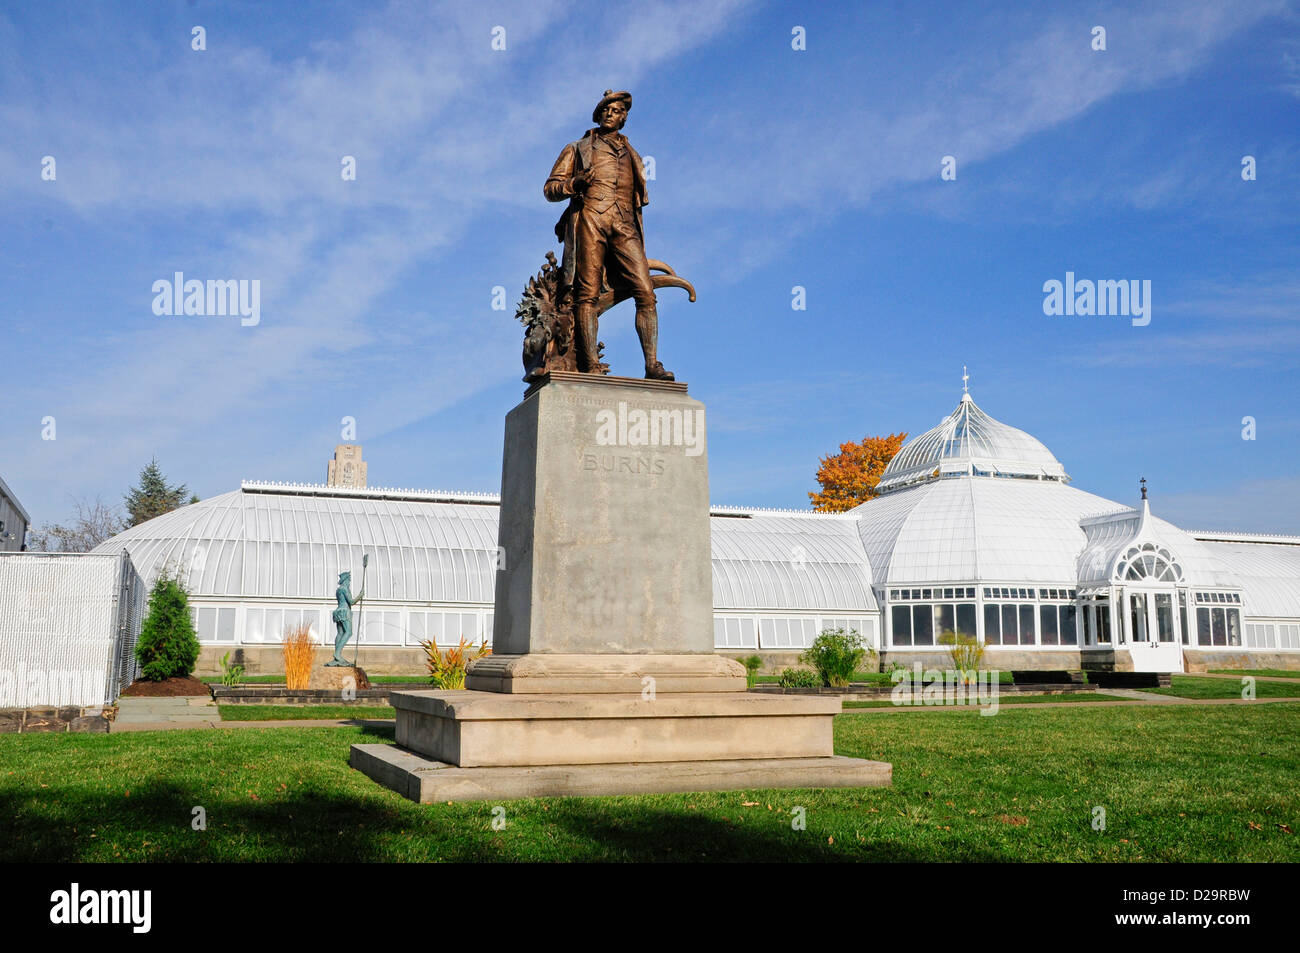 Statue de Robert Burns, Frick Conservatory, Pittsburgh, Pennsylvanie Banque D'Images